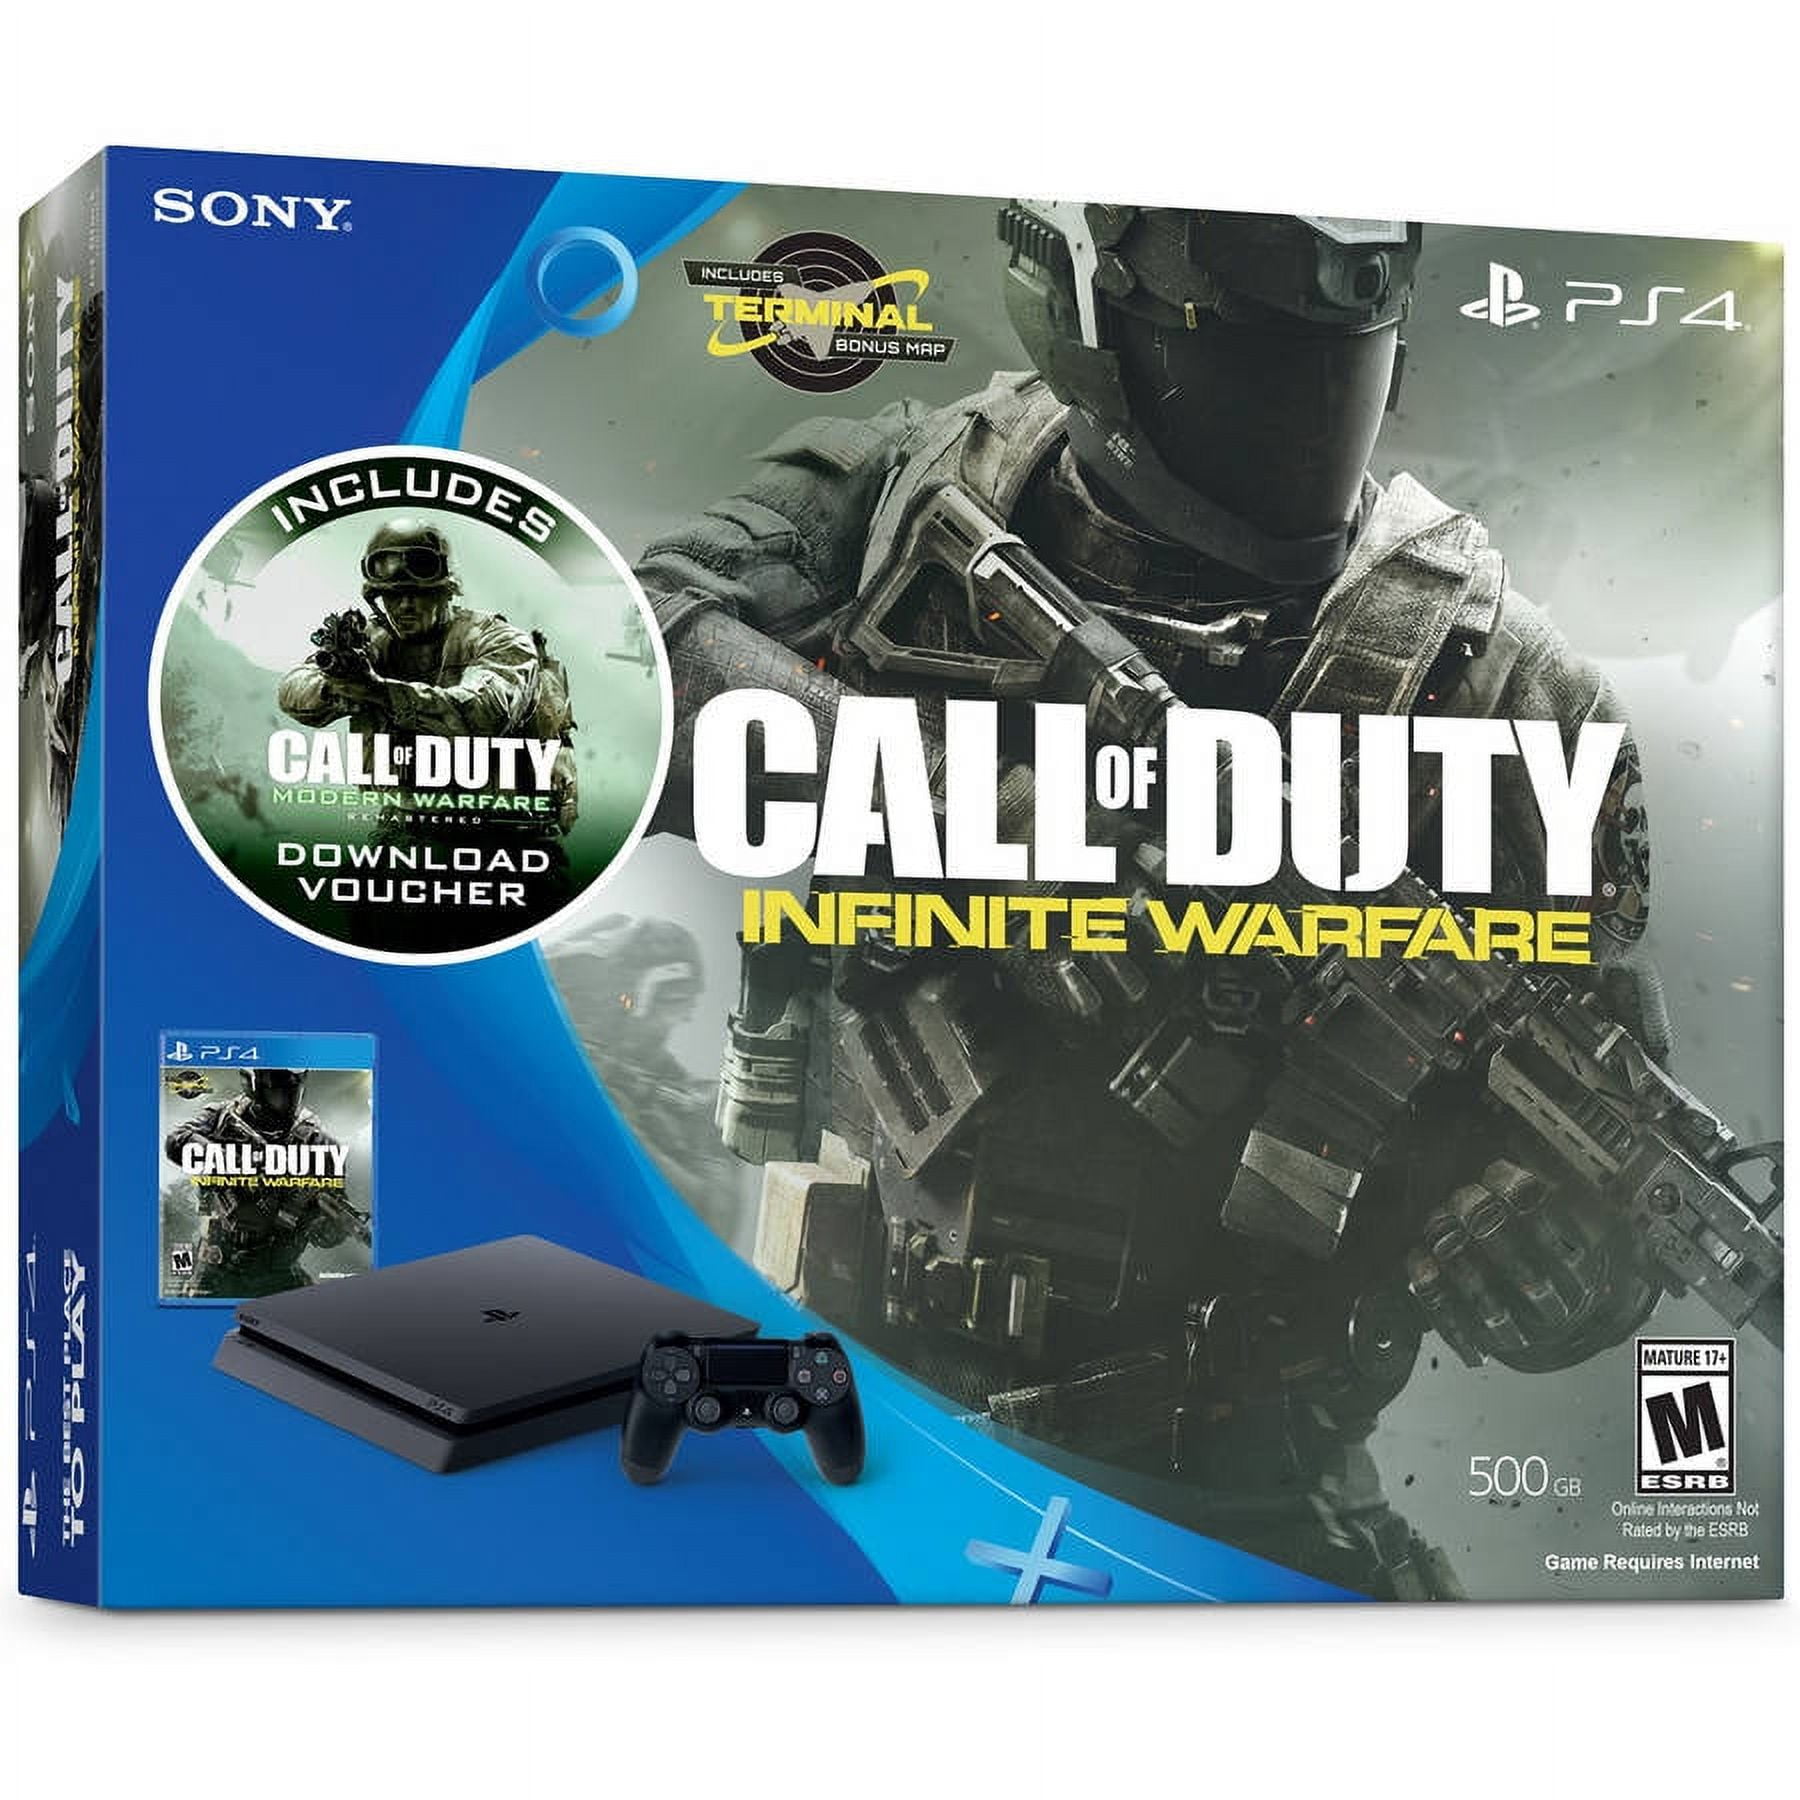 PlayStation 4/PS4 Call Of Duty: Advanced Warfare- Day Zero Edition